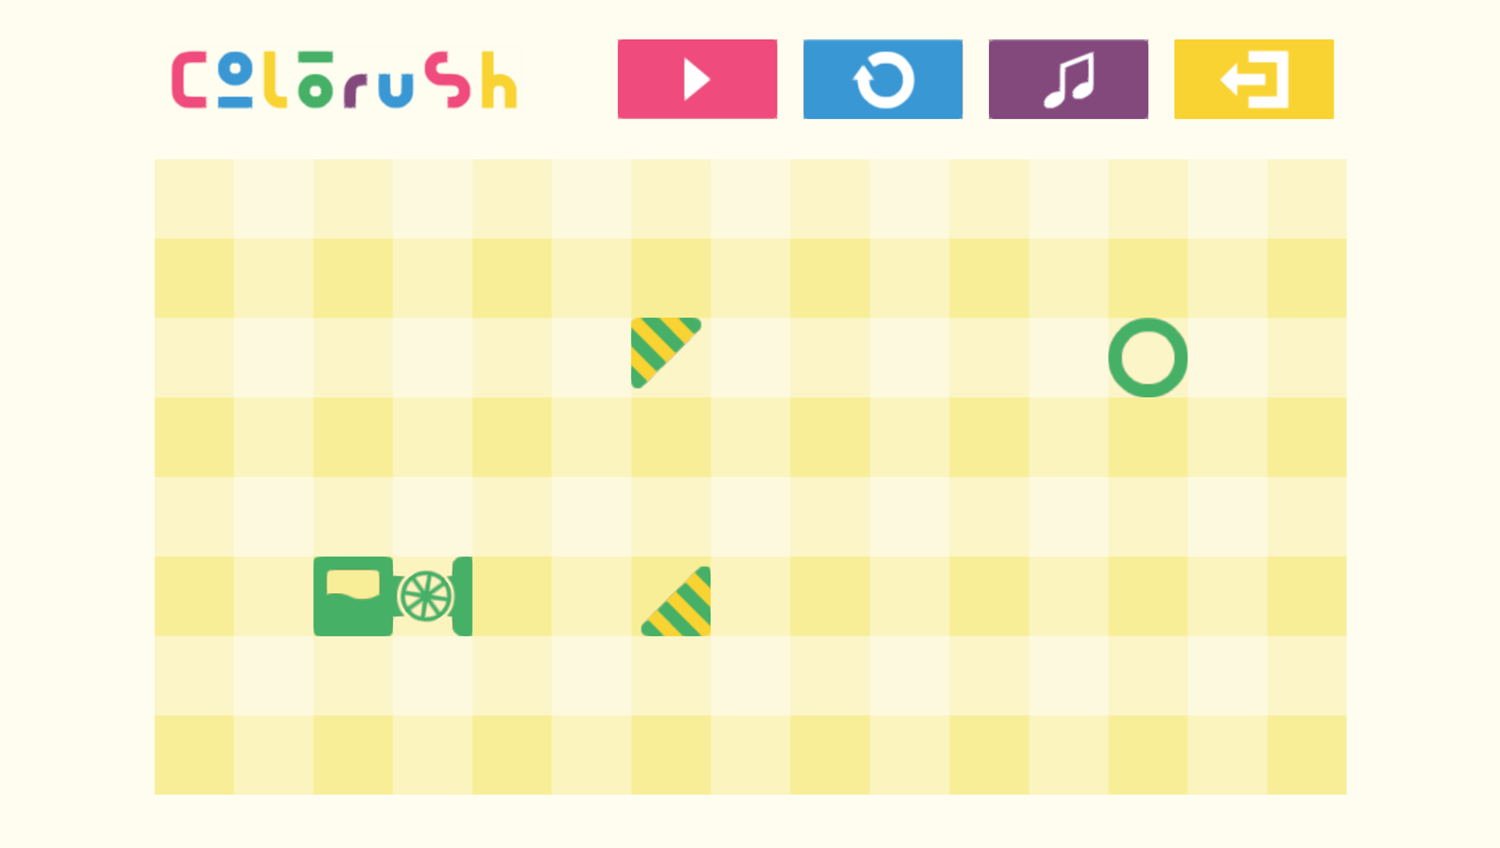 Colorush Game Start Screenshot.